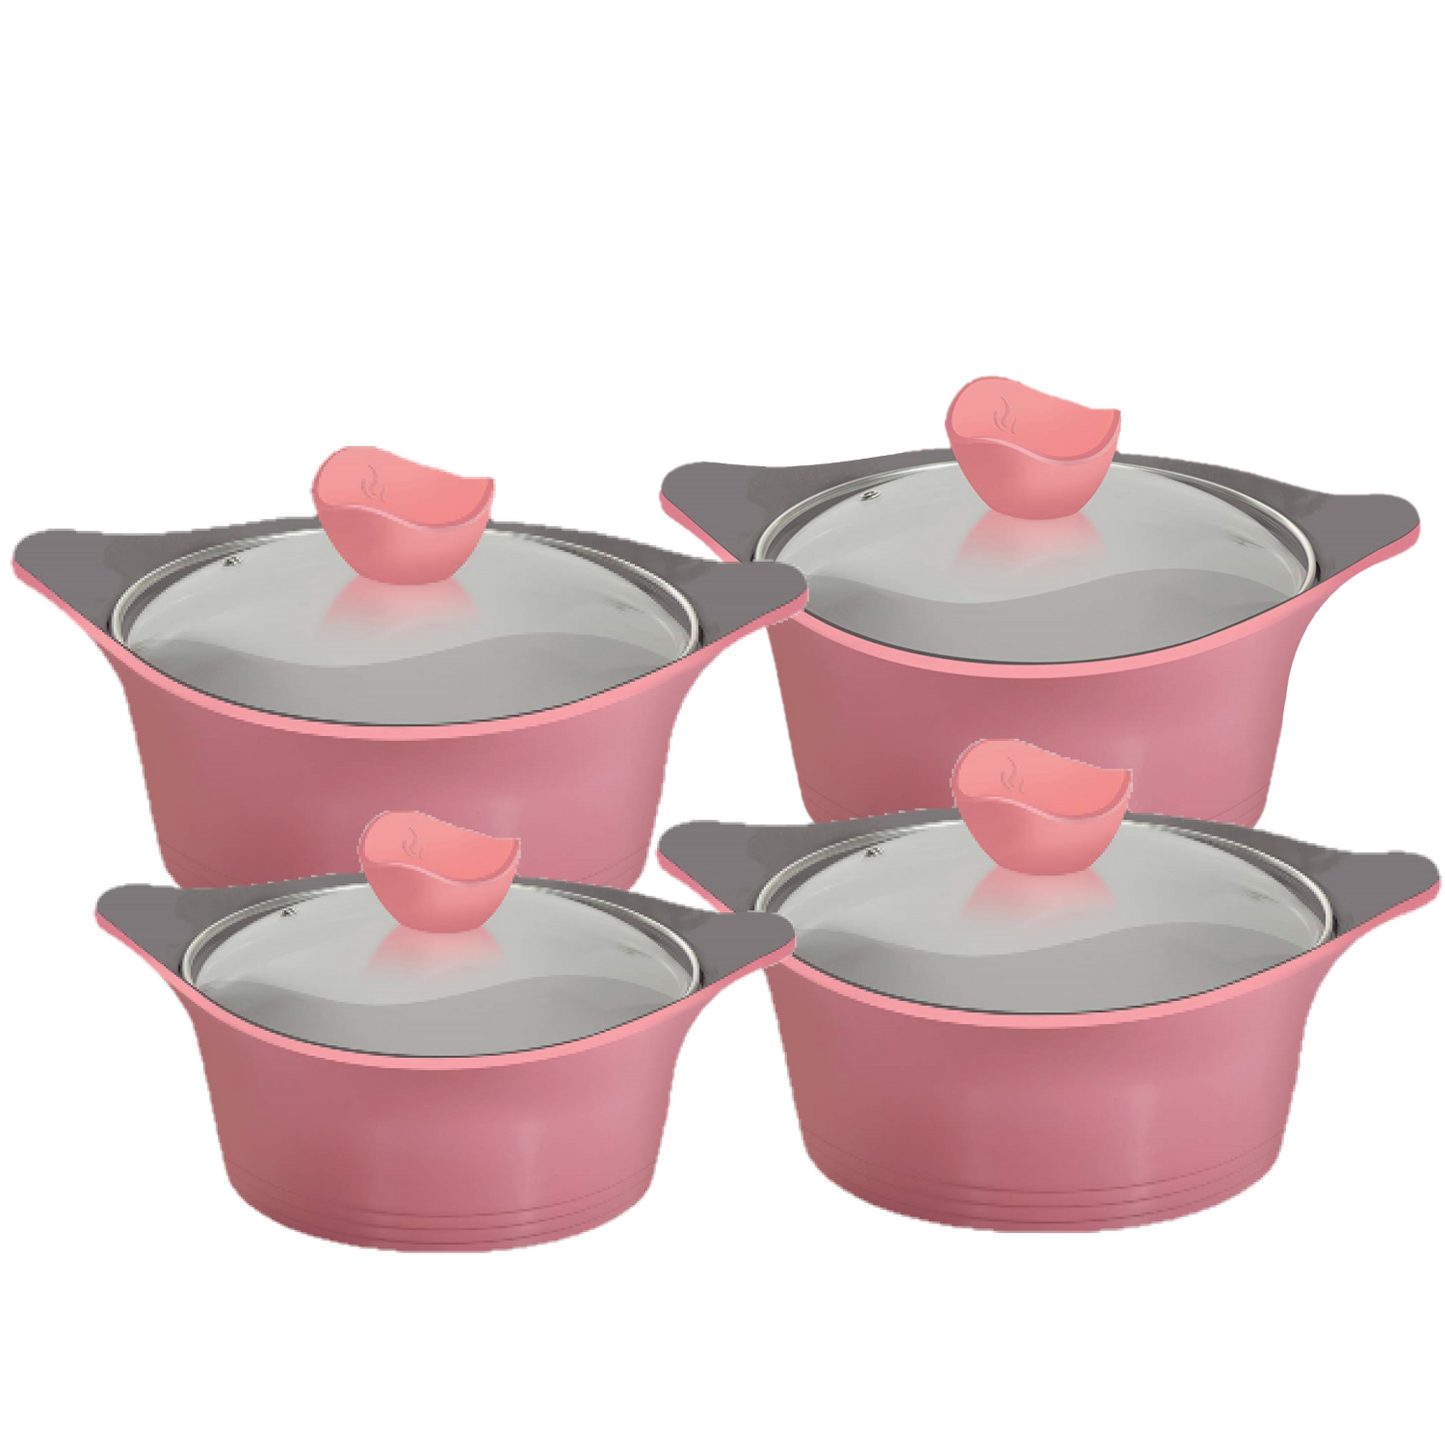 10 PC Pink Ceramic Casserole Cookware Set